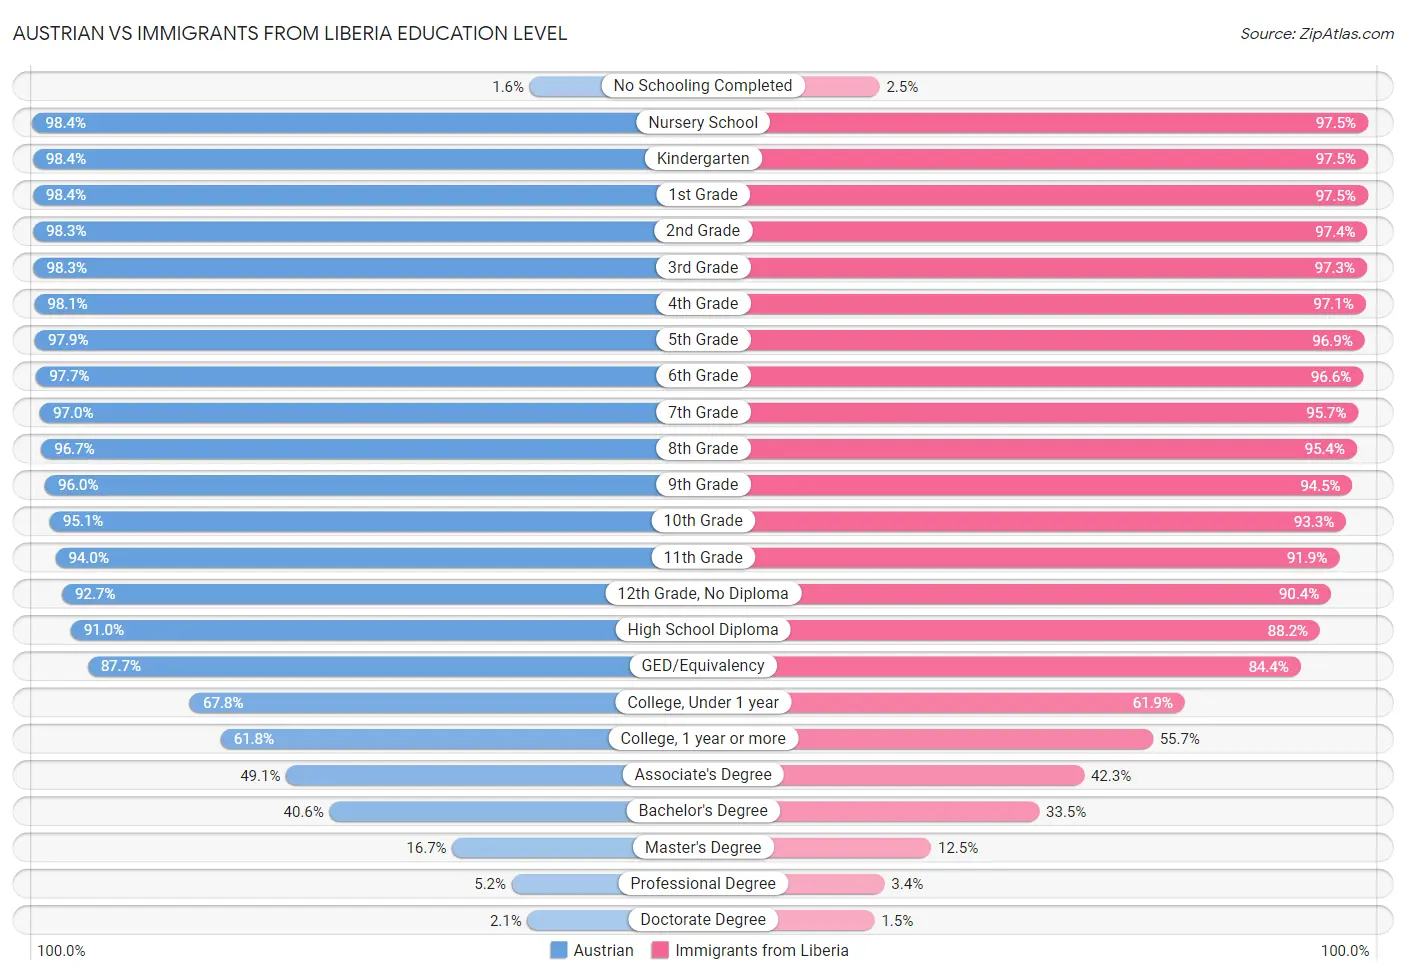 Austrian vs Immigrants from Liberia Education Level